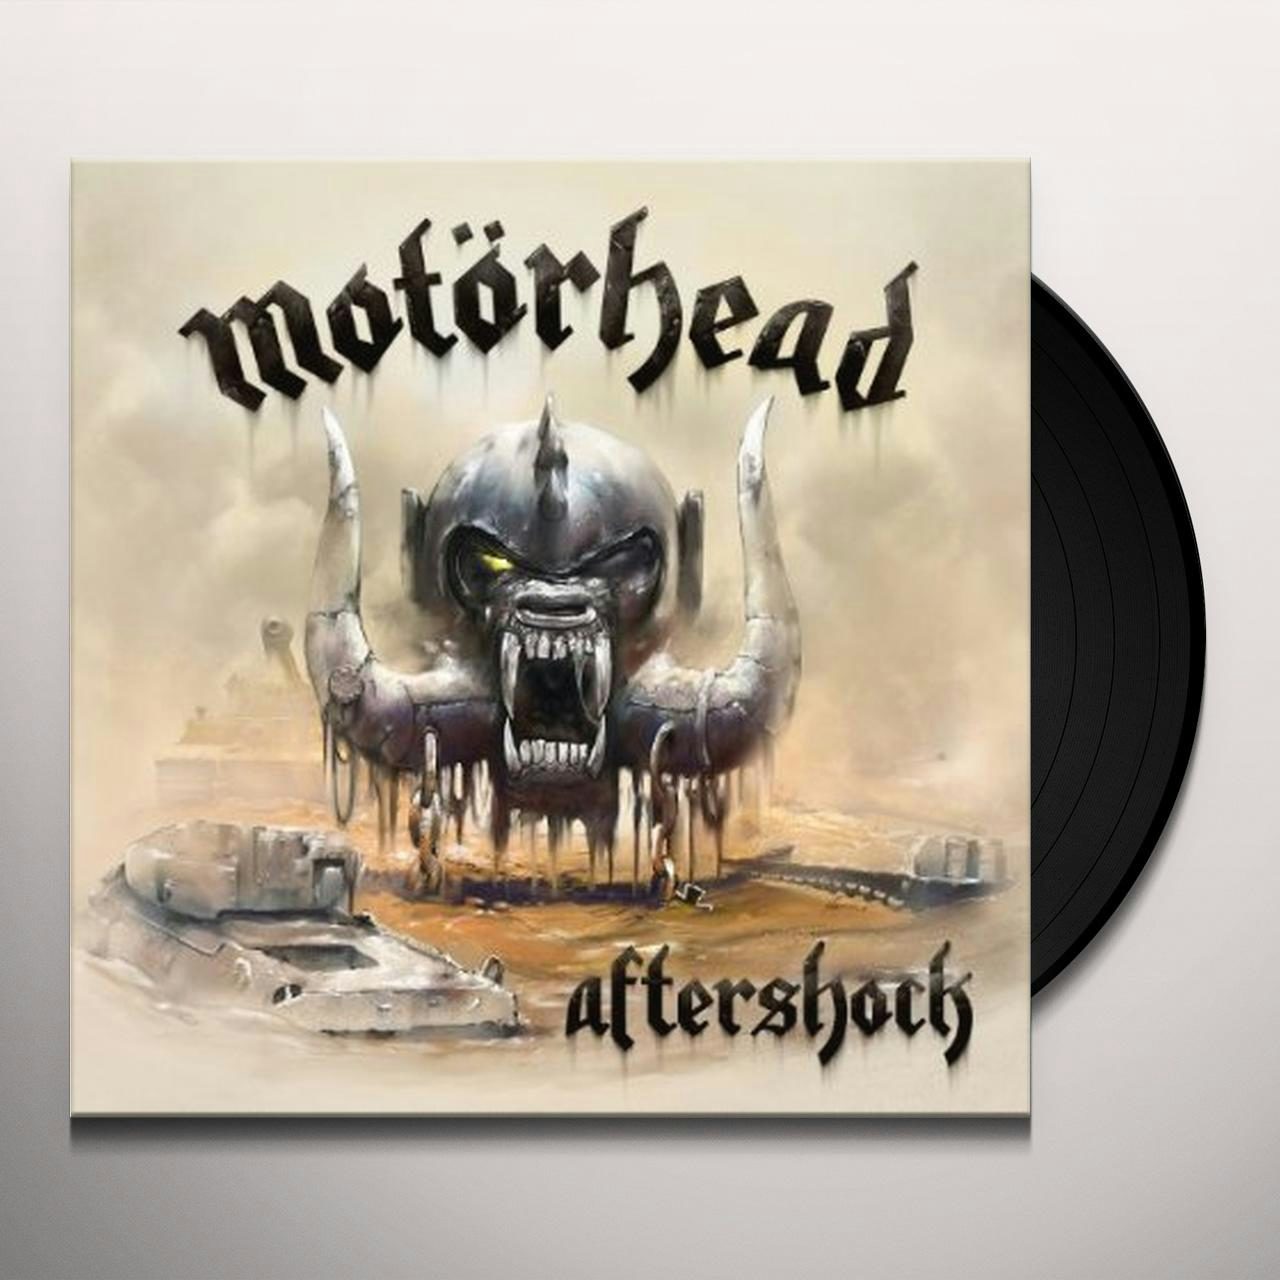 BBC LIVE IN SESSION 2 Vinyl Record - Motörhead